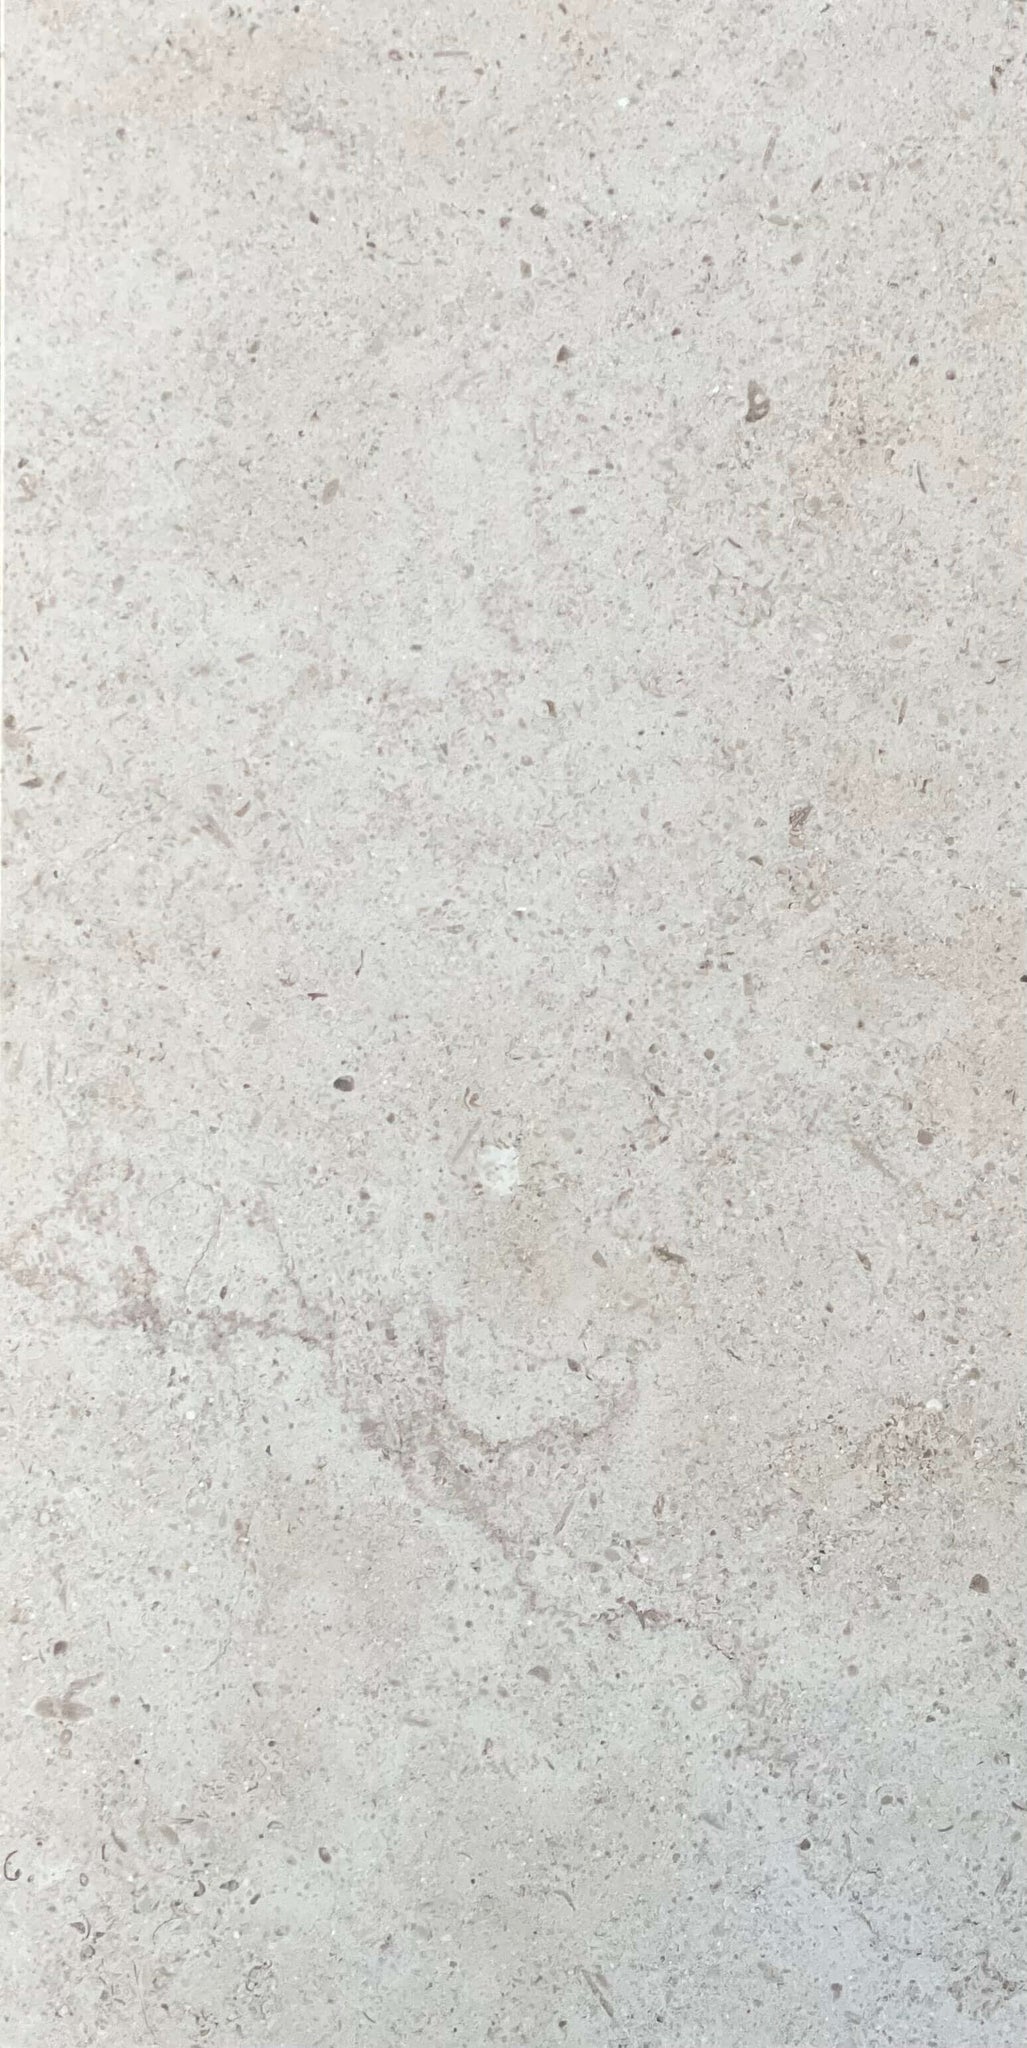 Gascogne Beige Limestone Tile Honed 12 x 24